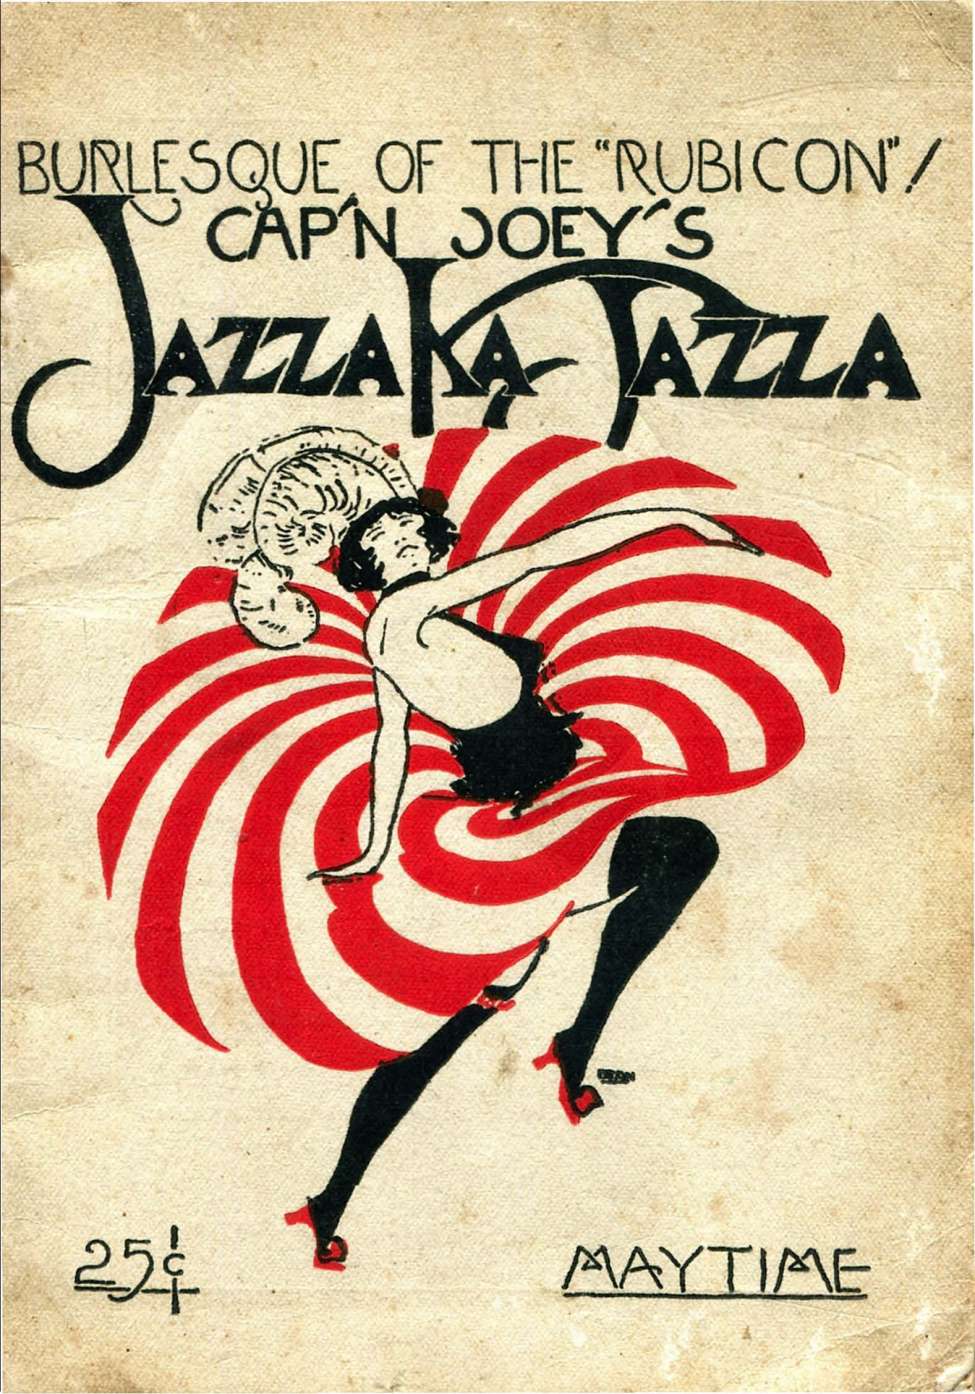 Book Cover For Cap'n Joey's Jazza Ka Jazza v1 4